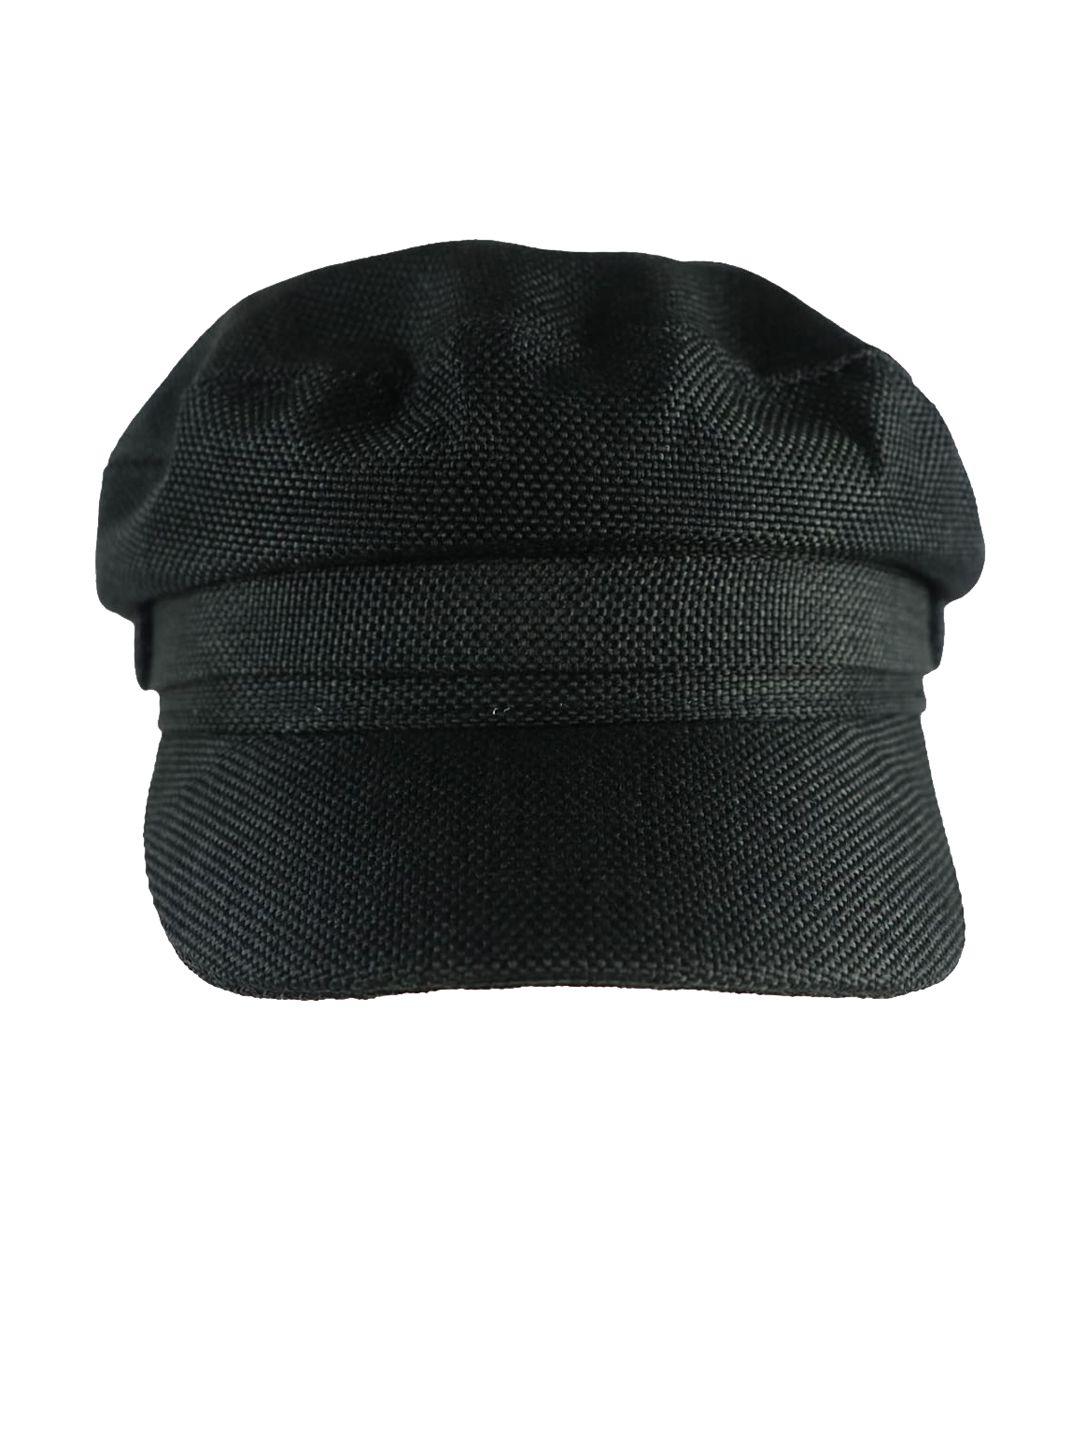 isweven unisex black solid visor cap